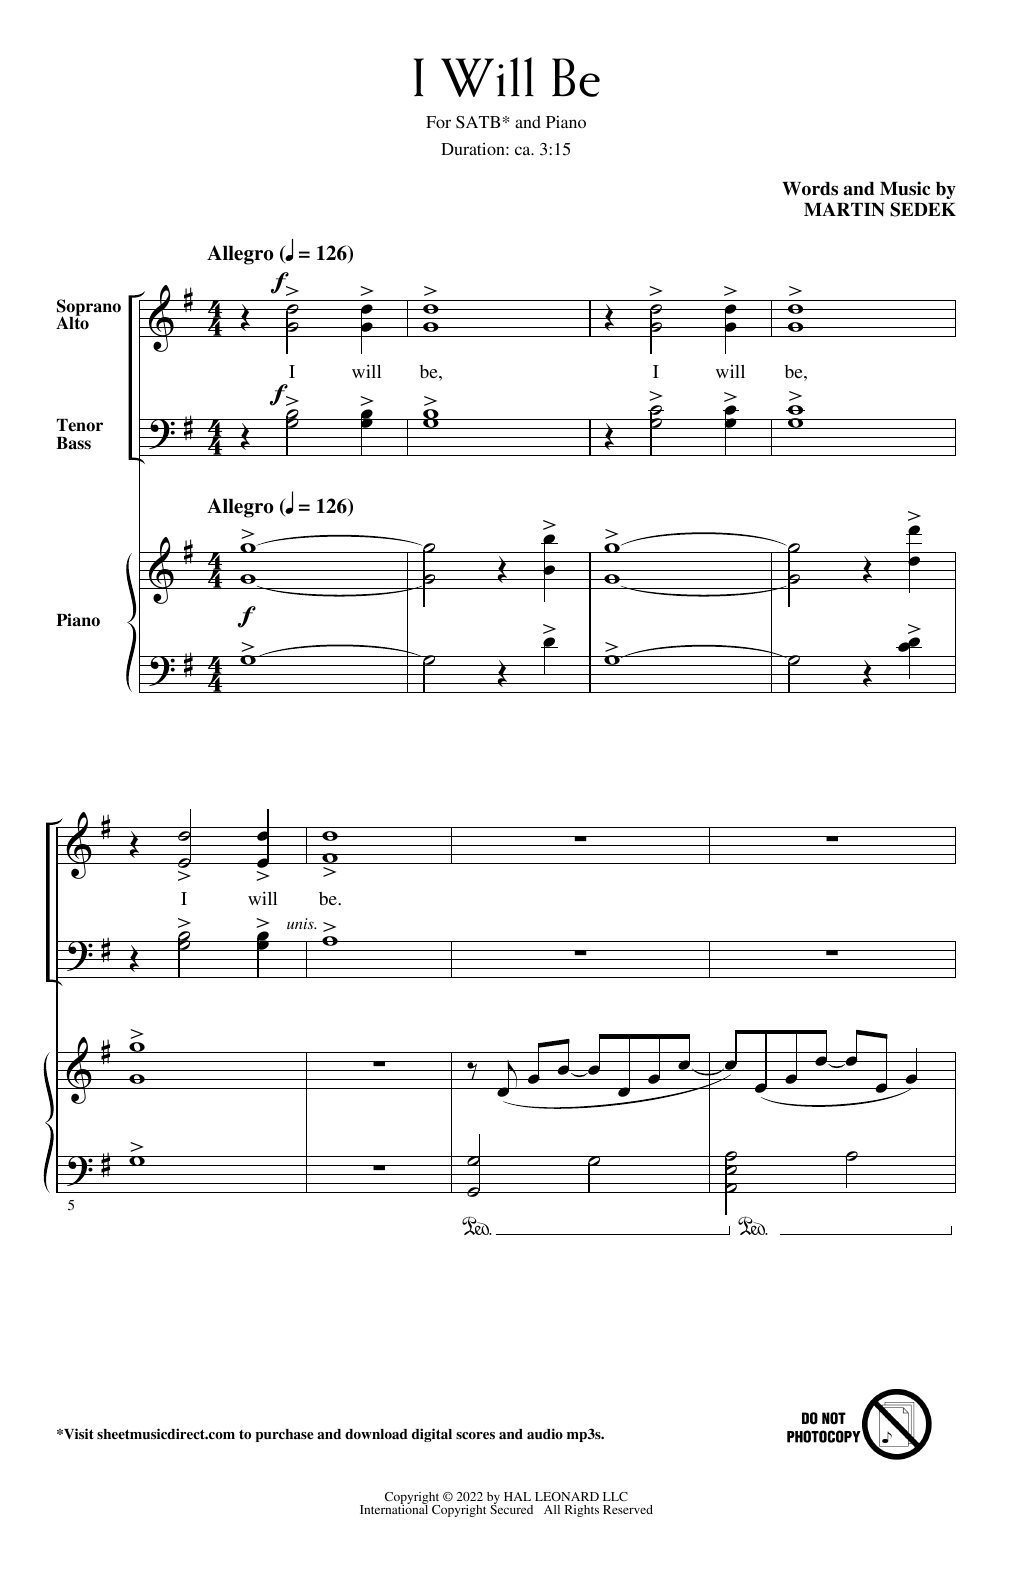 Martin Sedek I Will Be Sheet Music Notes & Chords for SATB Choir - Download or Print PDF